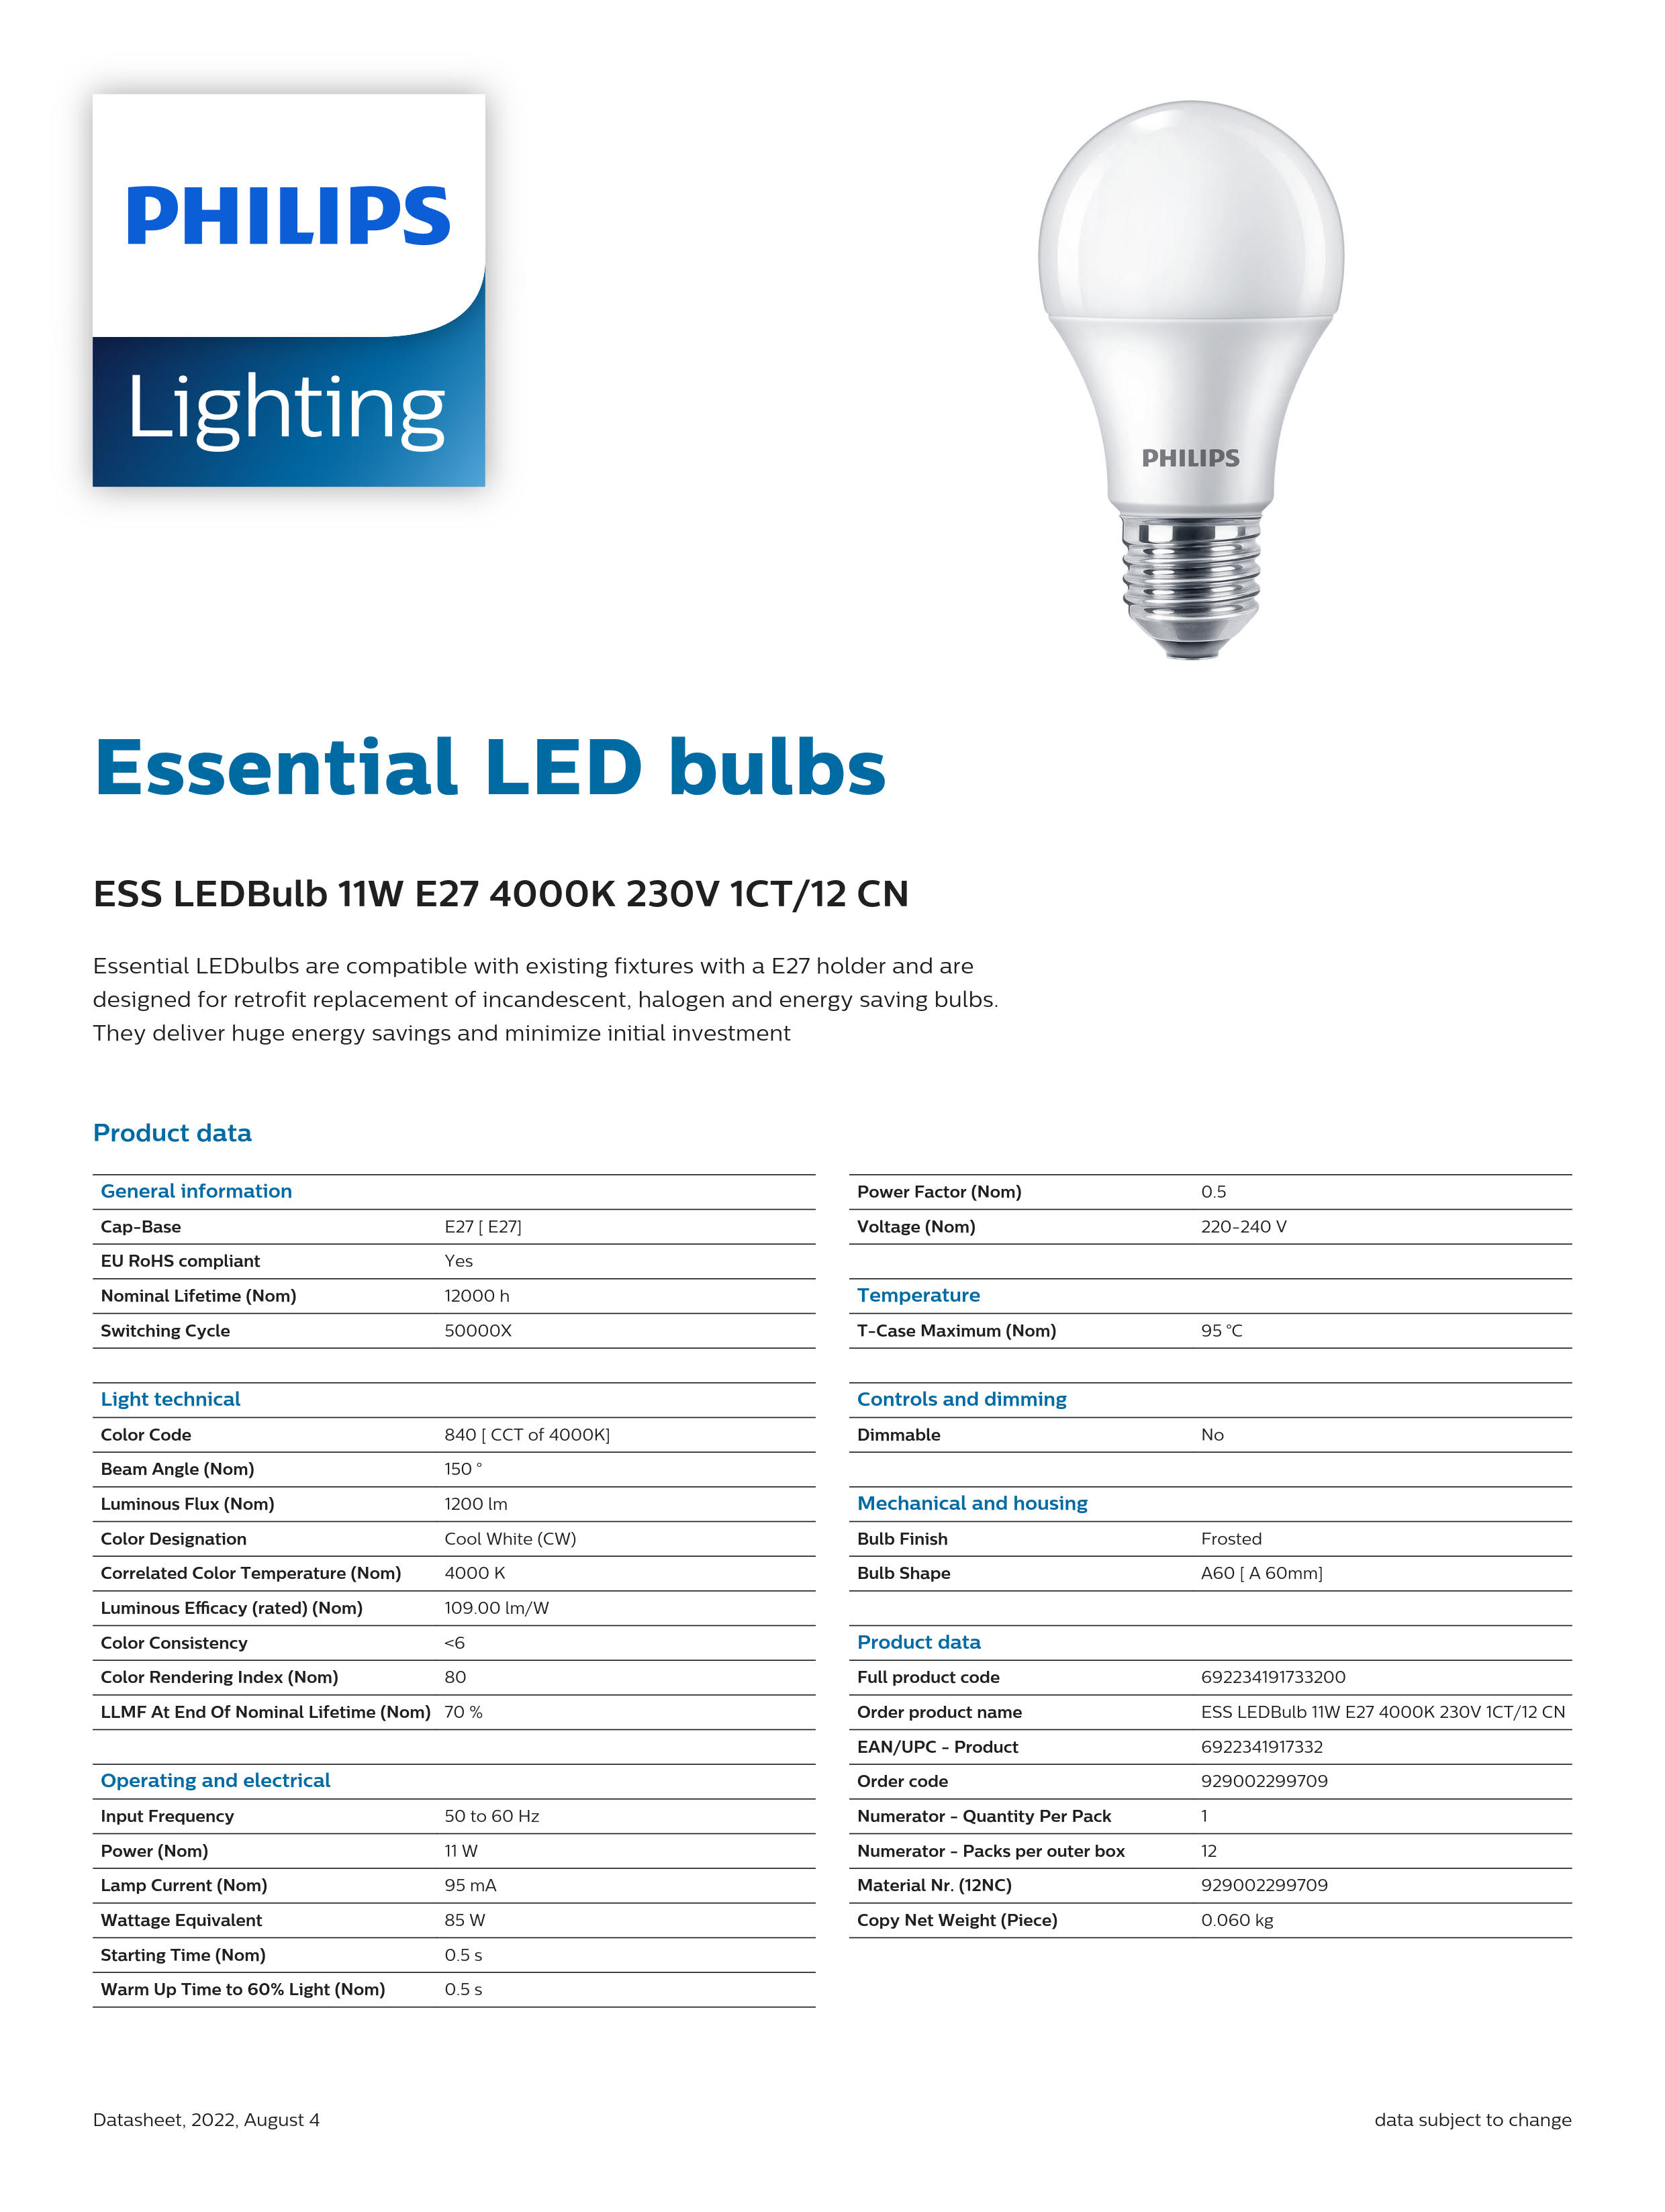 PHILIPS Essential LED bulbs 11W E27 4000K 230V 1CT/12 CN 929002299709